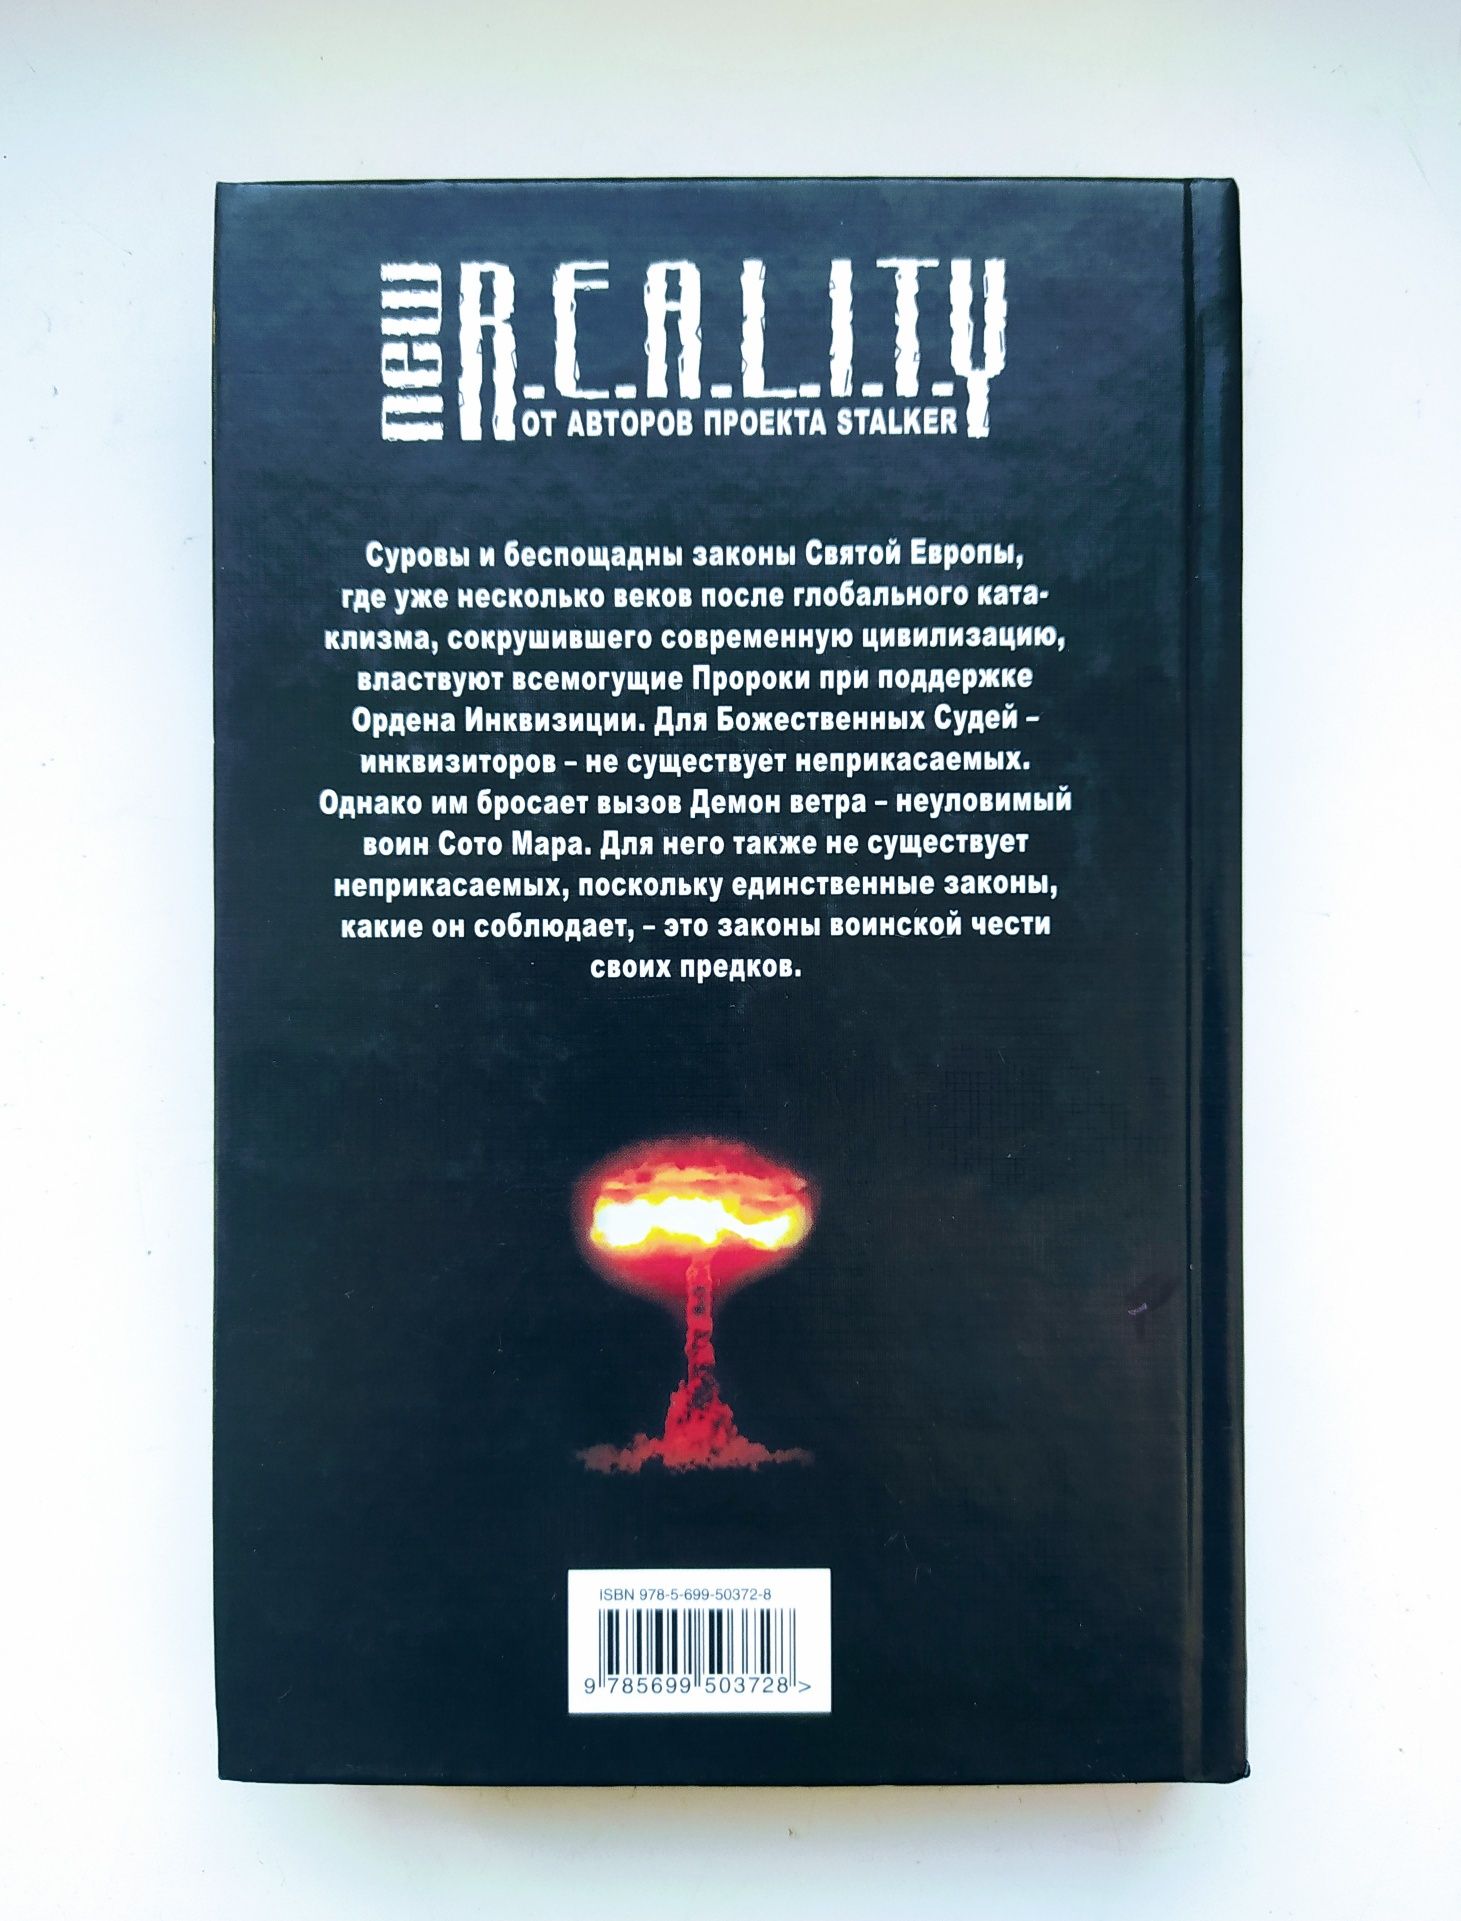 New R.E.A.L.I.T.Y. Роман Глушков. "Демон ветра"